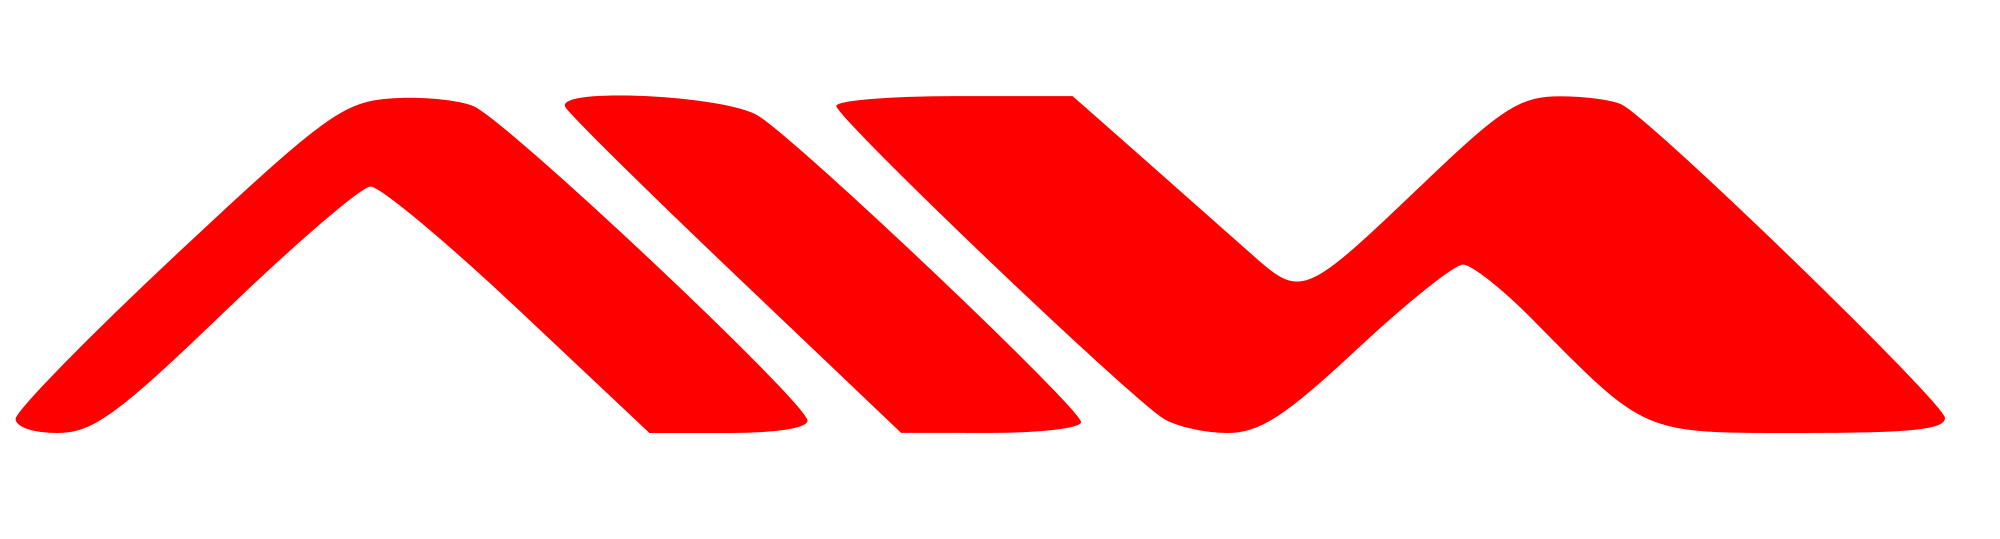 Aiwa Logo PNG - 107932